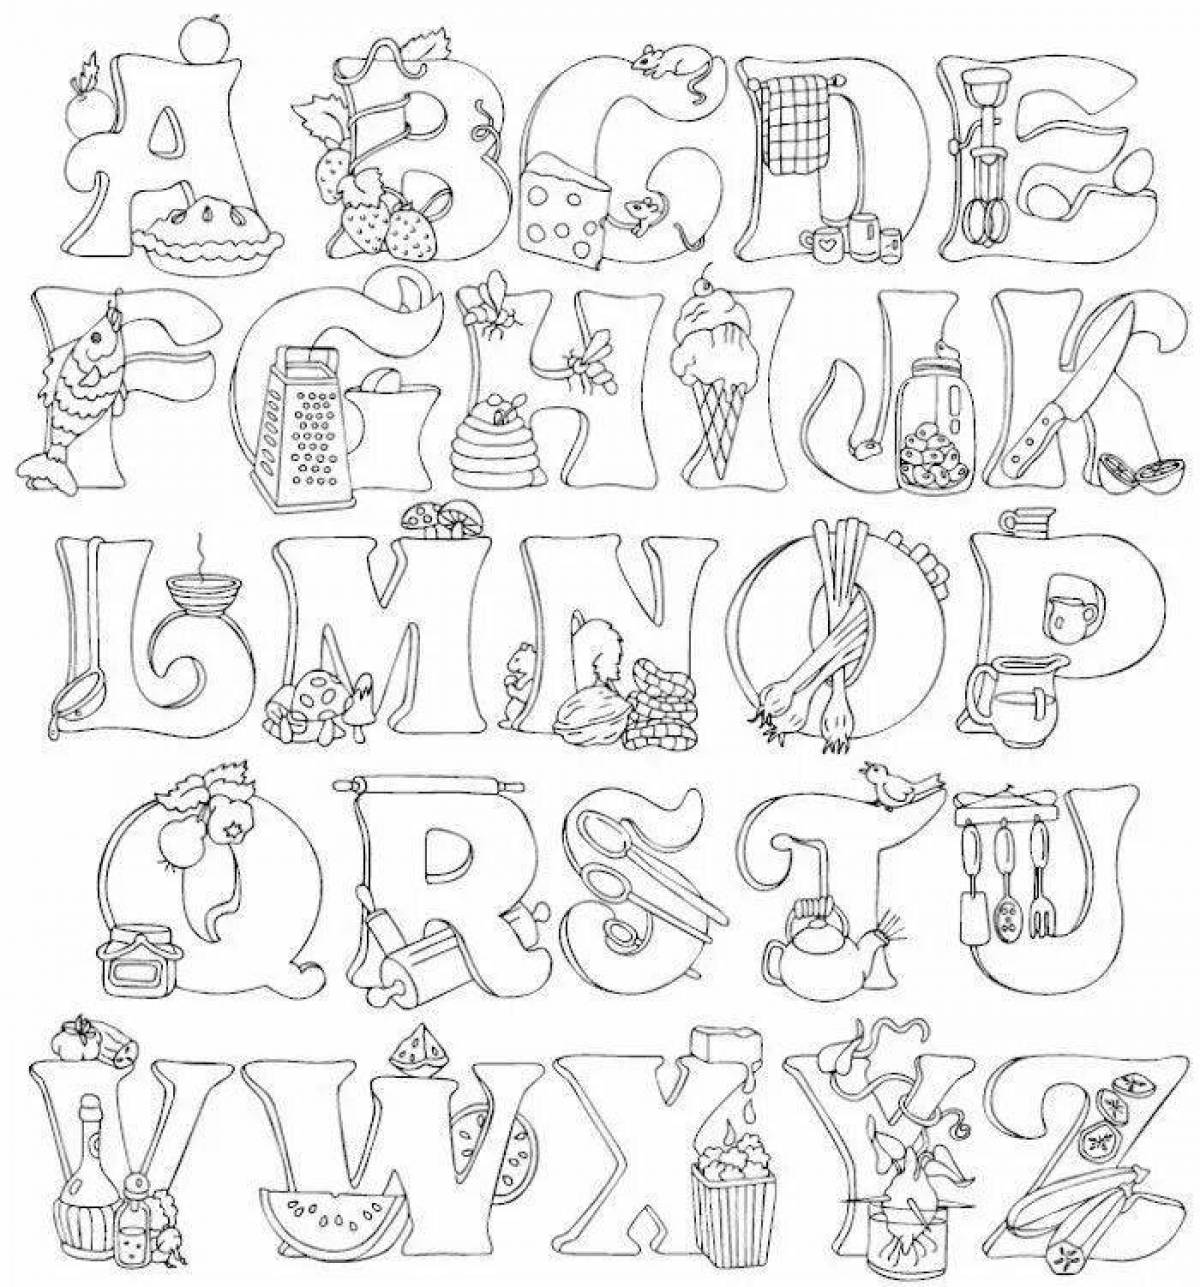 Fascinating alphabet coloring book